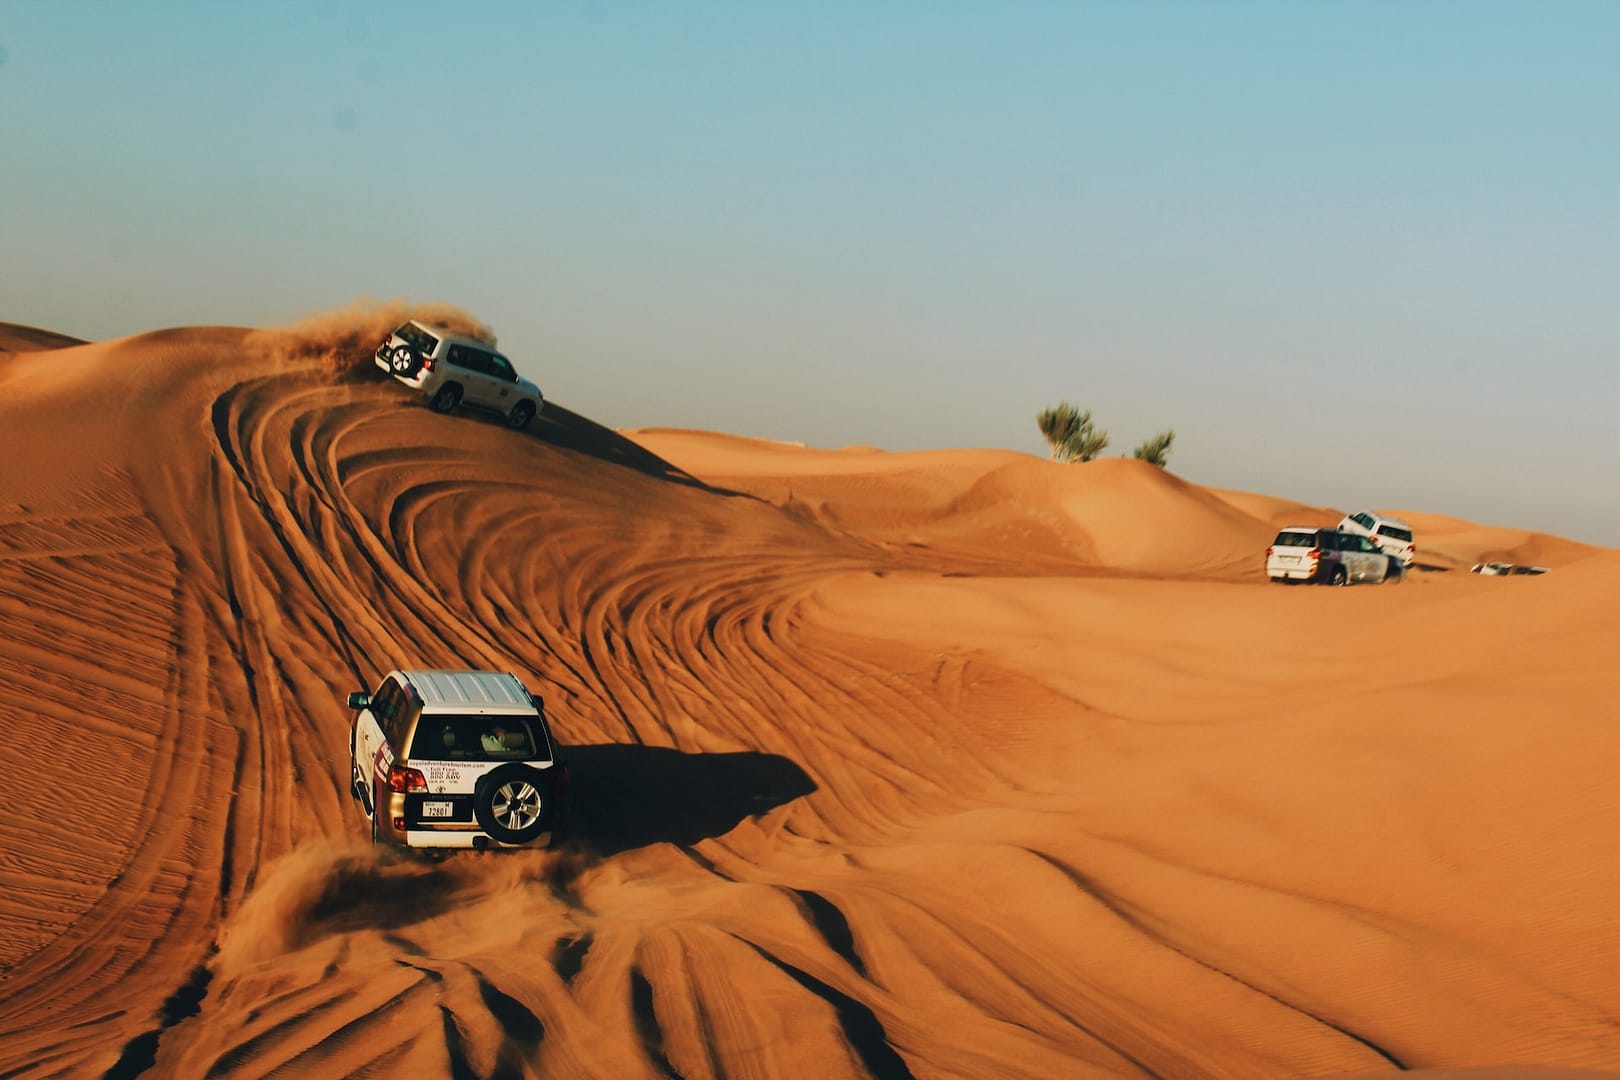 Safari in Dubai - cars 4x4 on the dunes